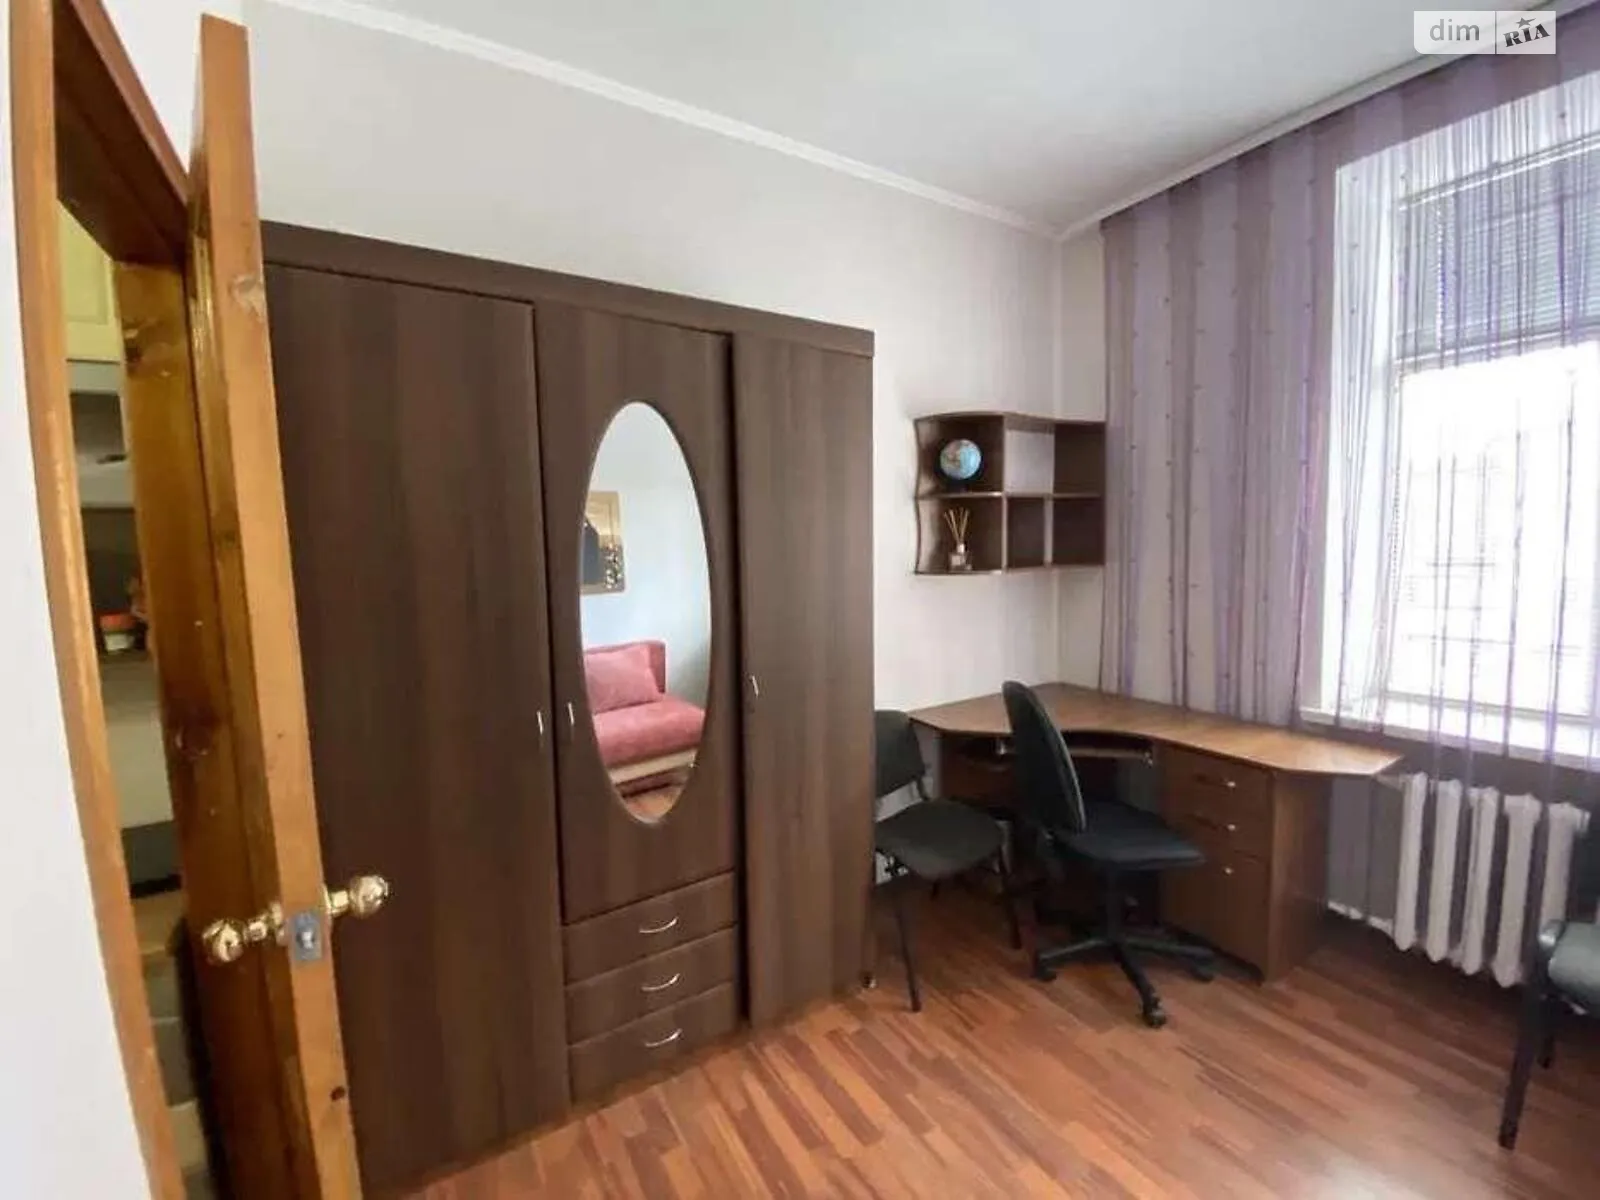 Продается комната 20 кв. м в Харькове - фото 3